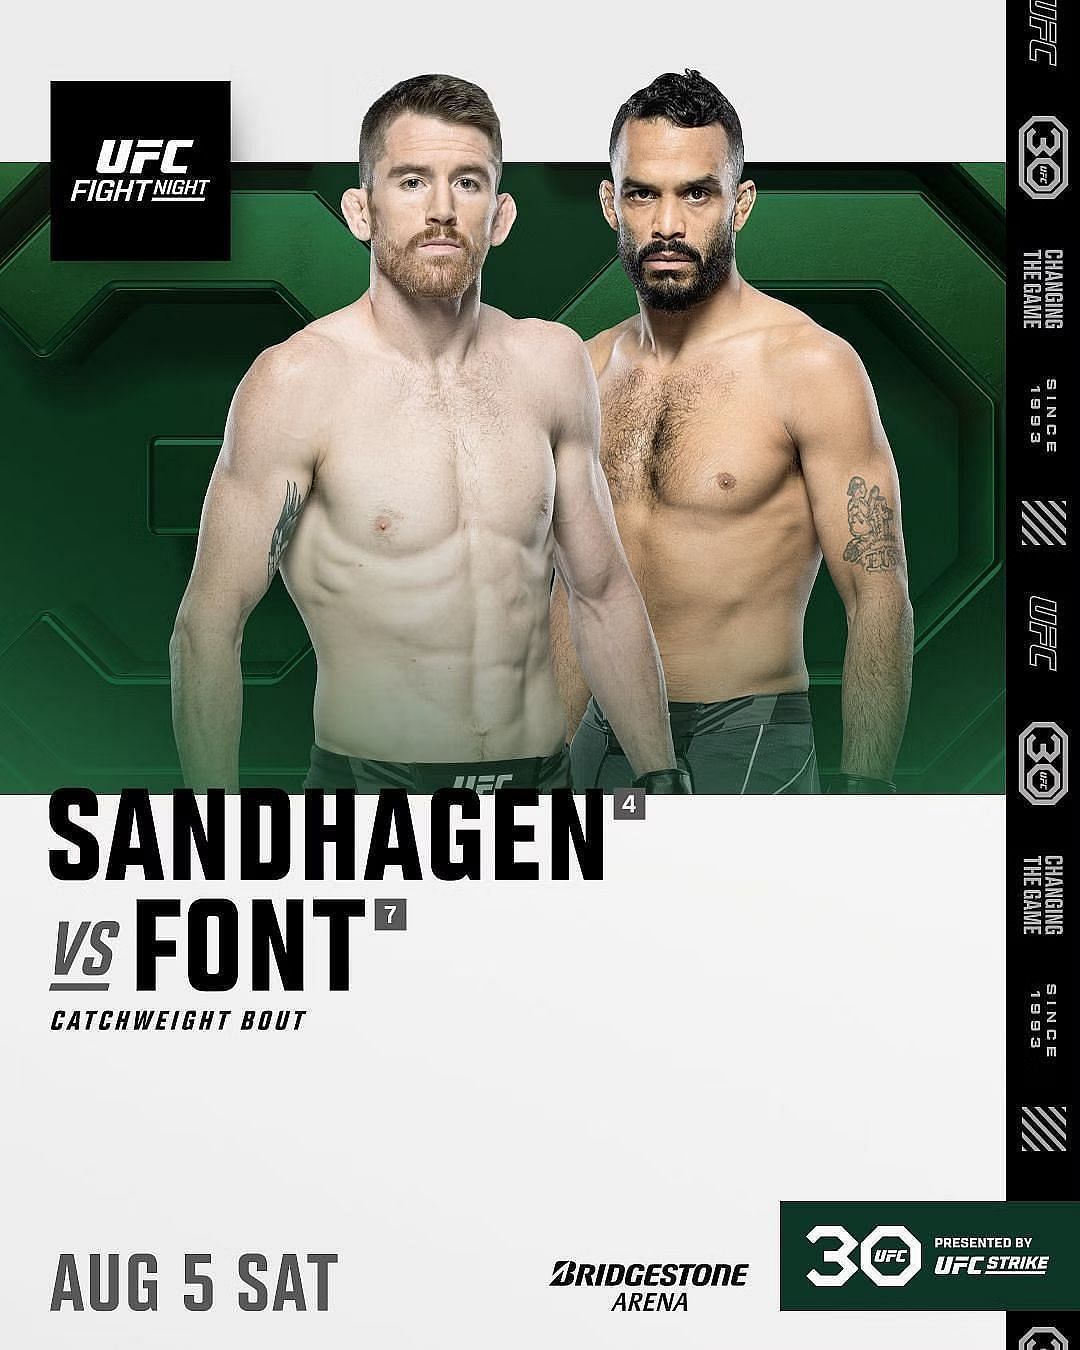 UFC Fight Night: Sandhagen vs. Font [Image Credit: twitter.com/ufc]